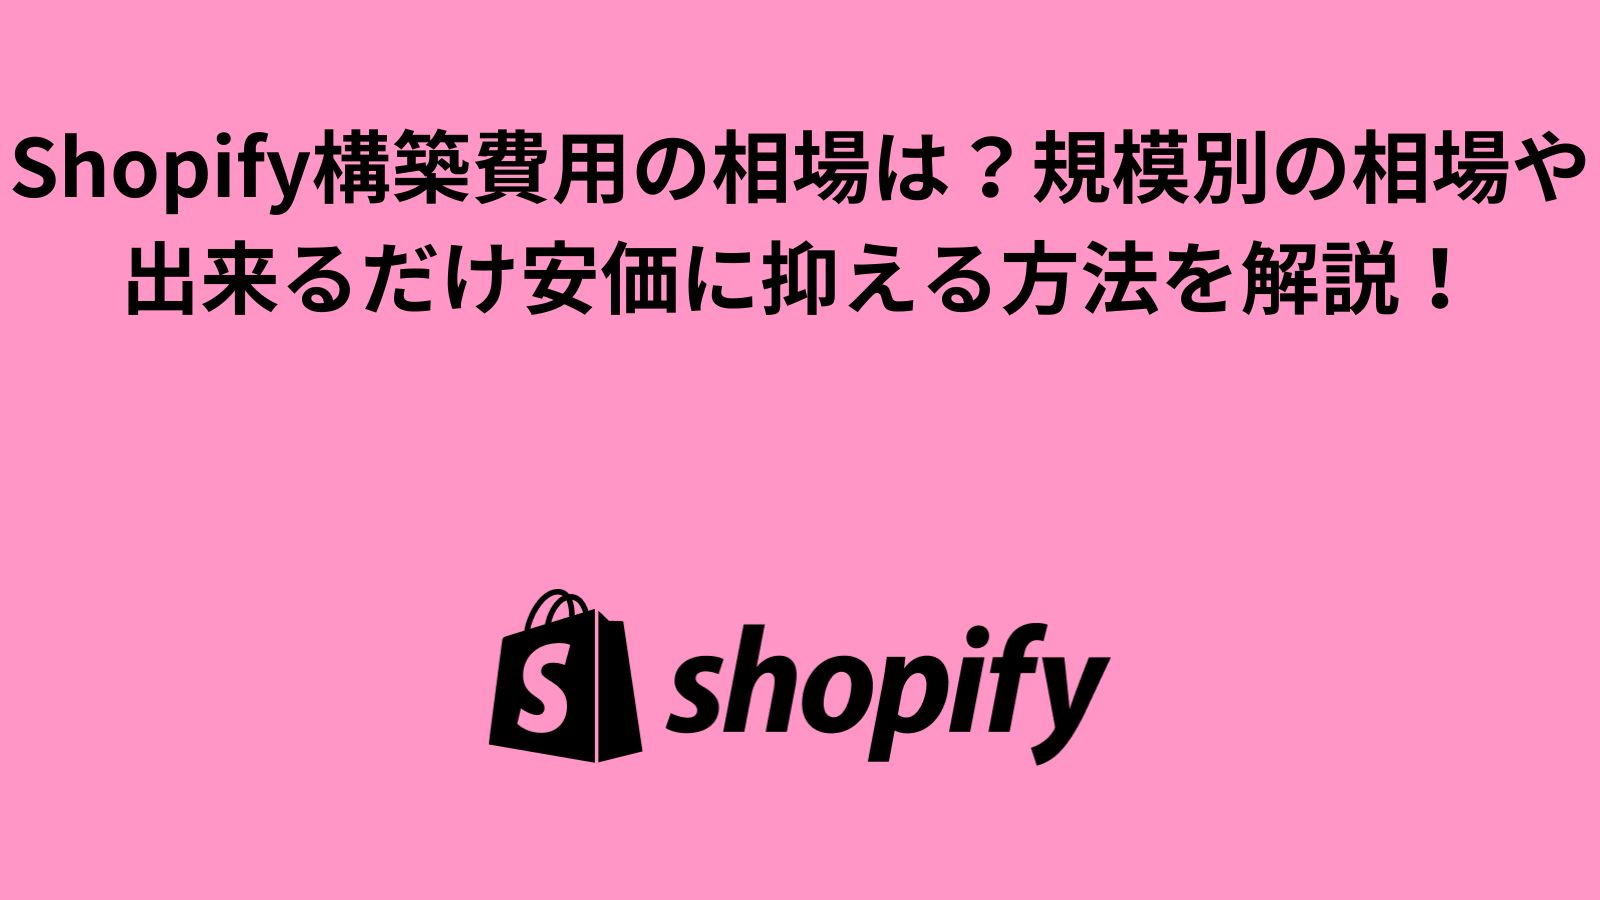 Shopify構築費用の相場は？規模別の相場や出来るだけ安価に抑える方法を解説！